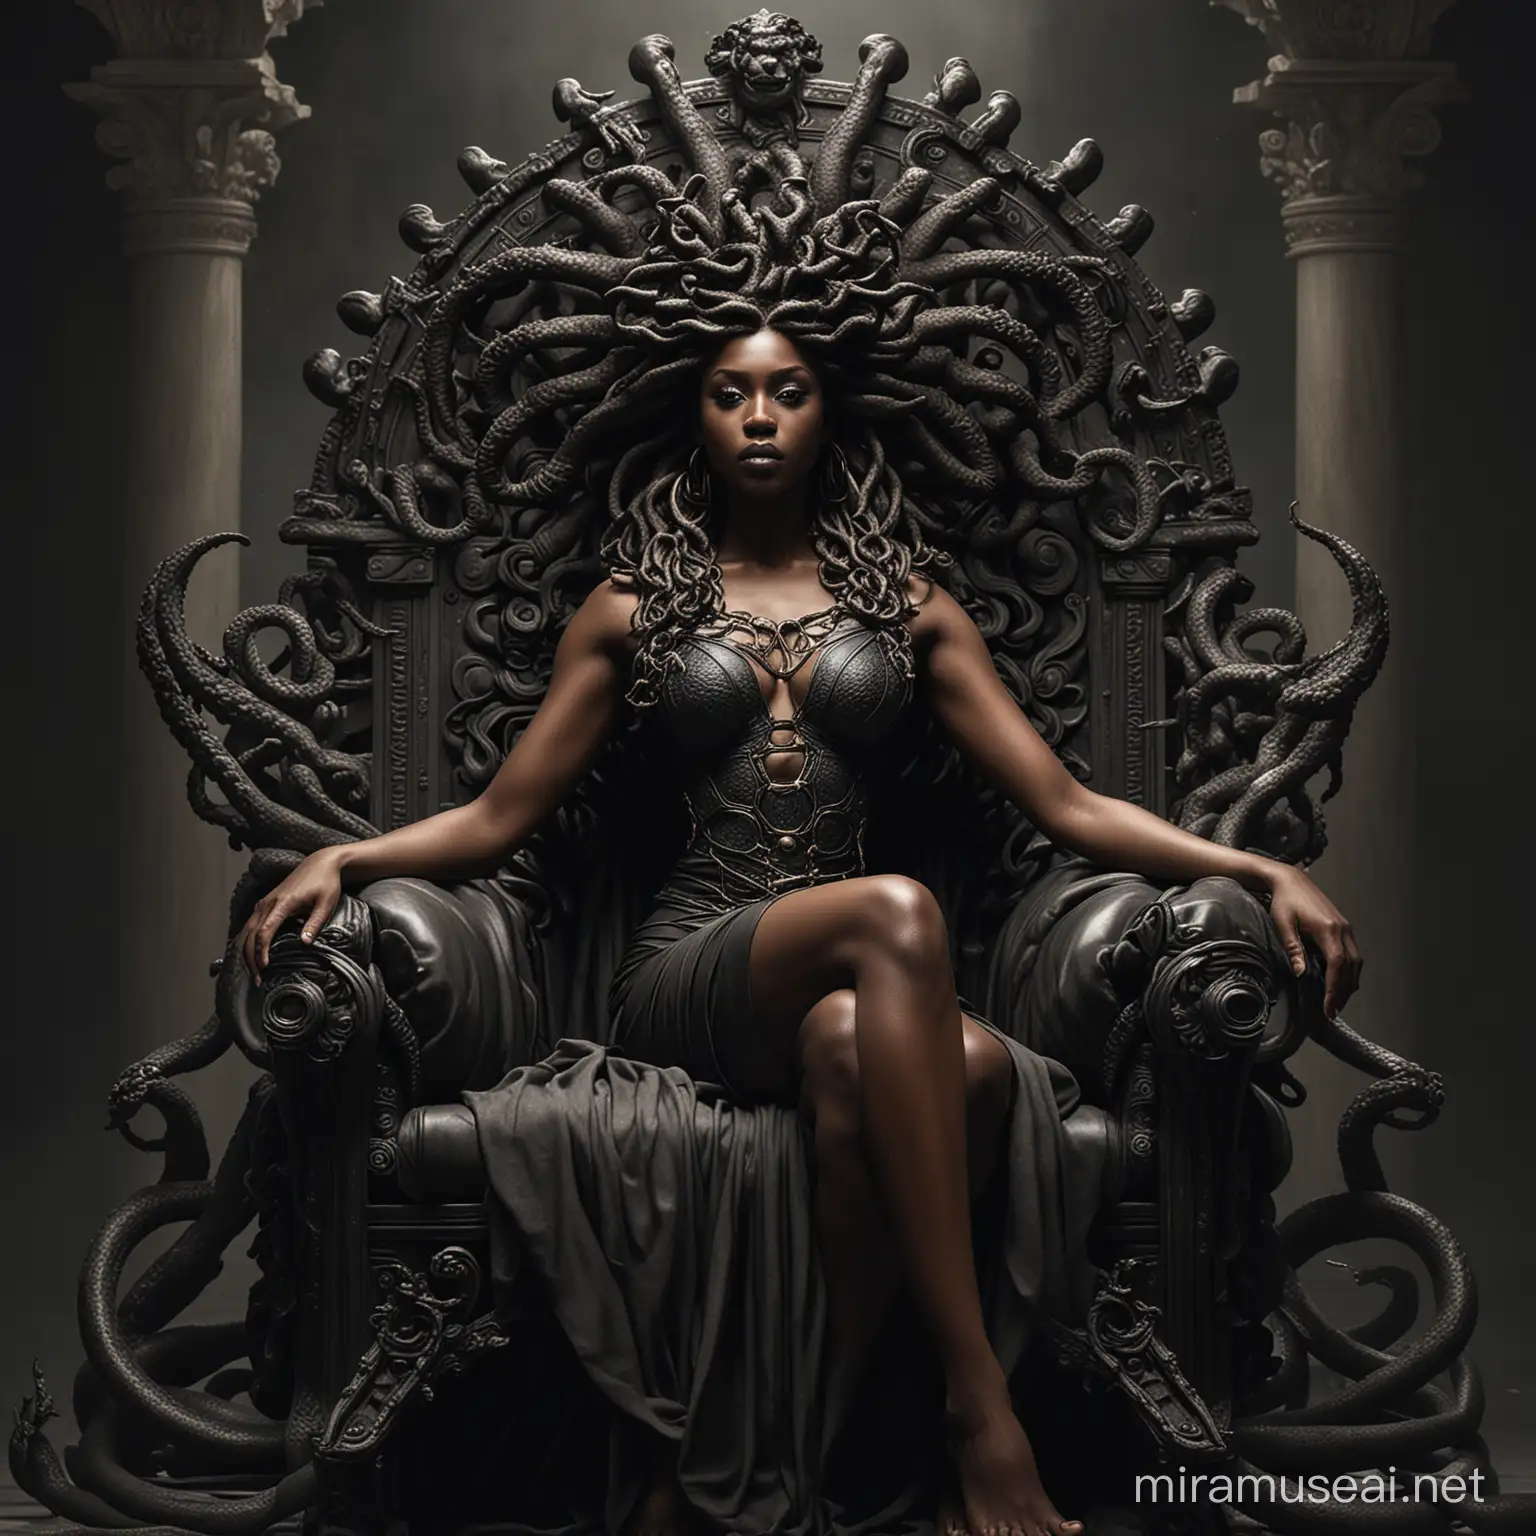 Majestic dark skin Medusa Sitting on His Throne in Commanding Pose